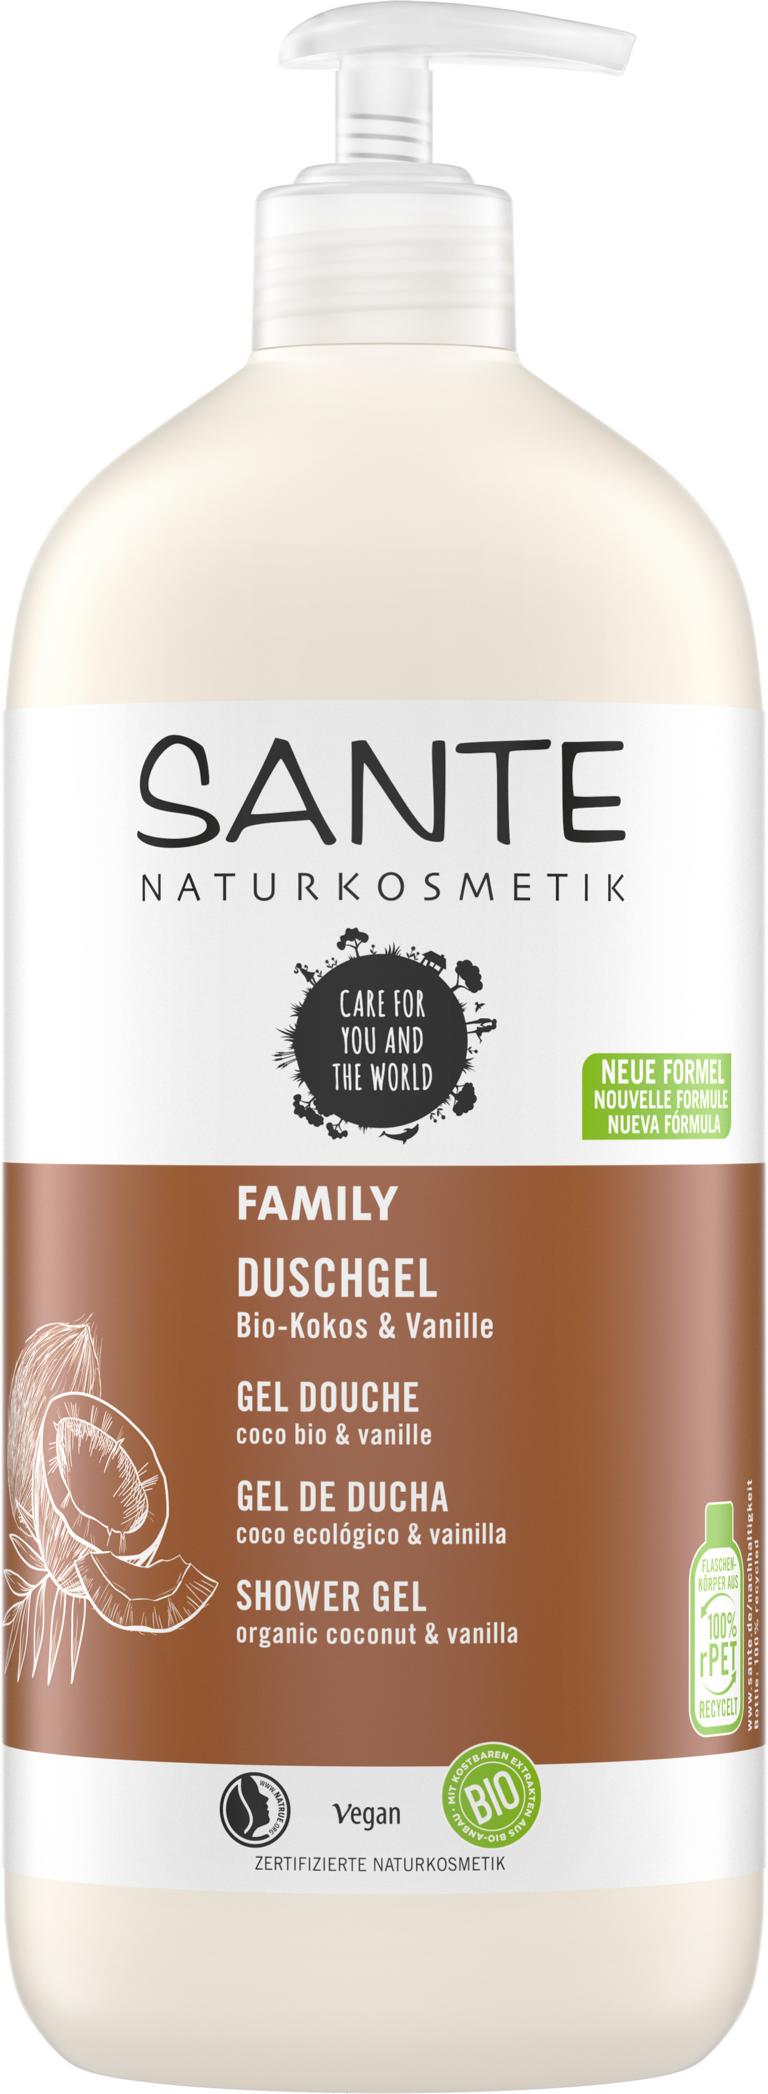 Sante FAMILY Duschgel Bio-Kokos & Vanille 950 ml